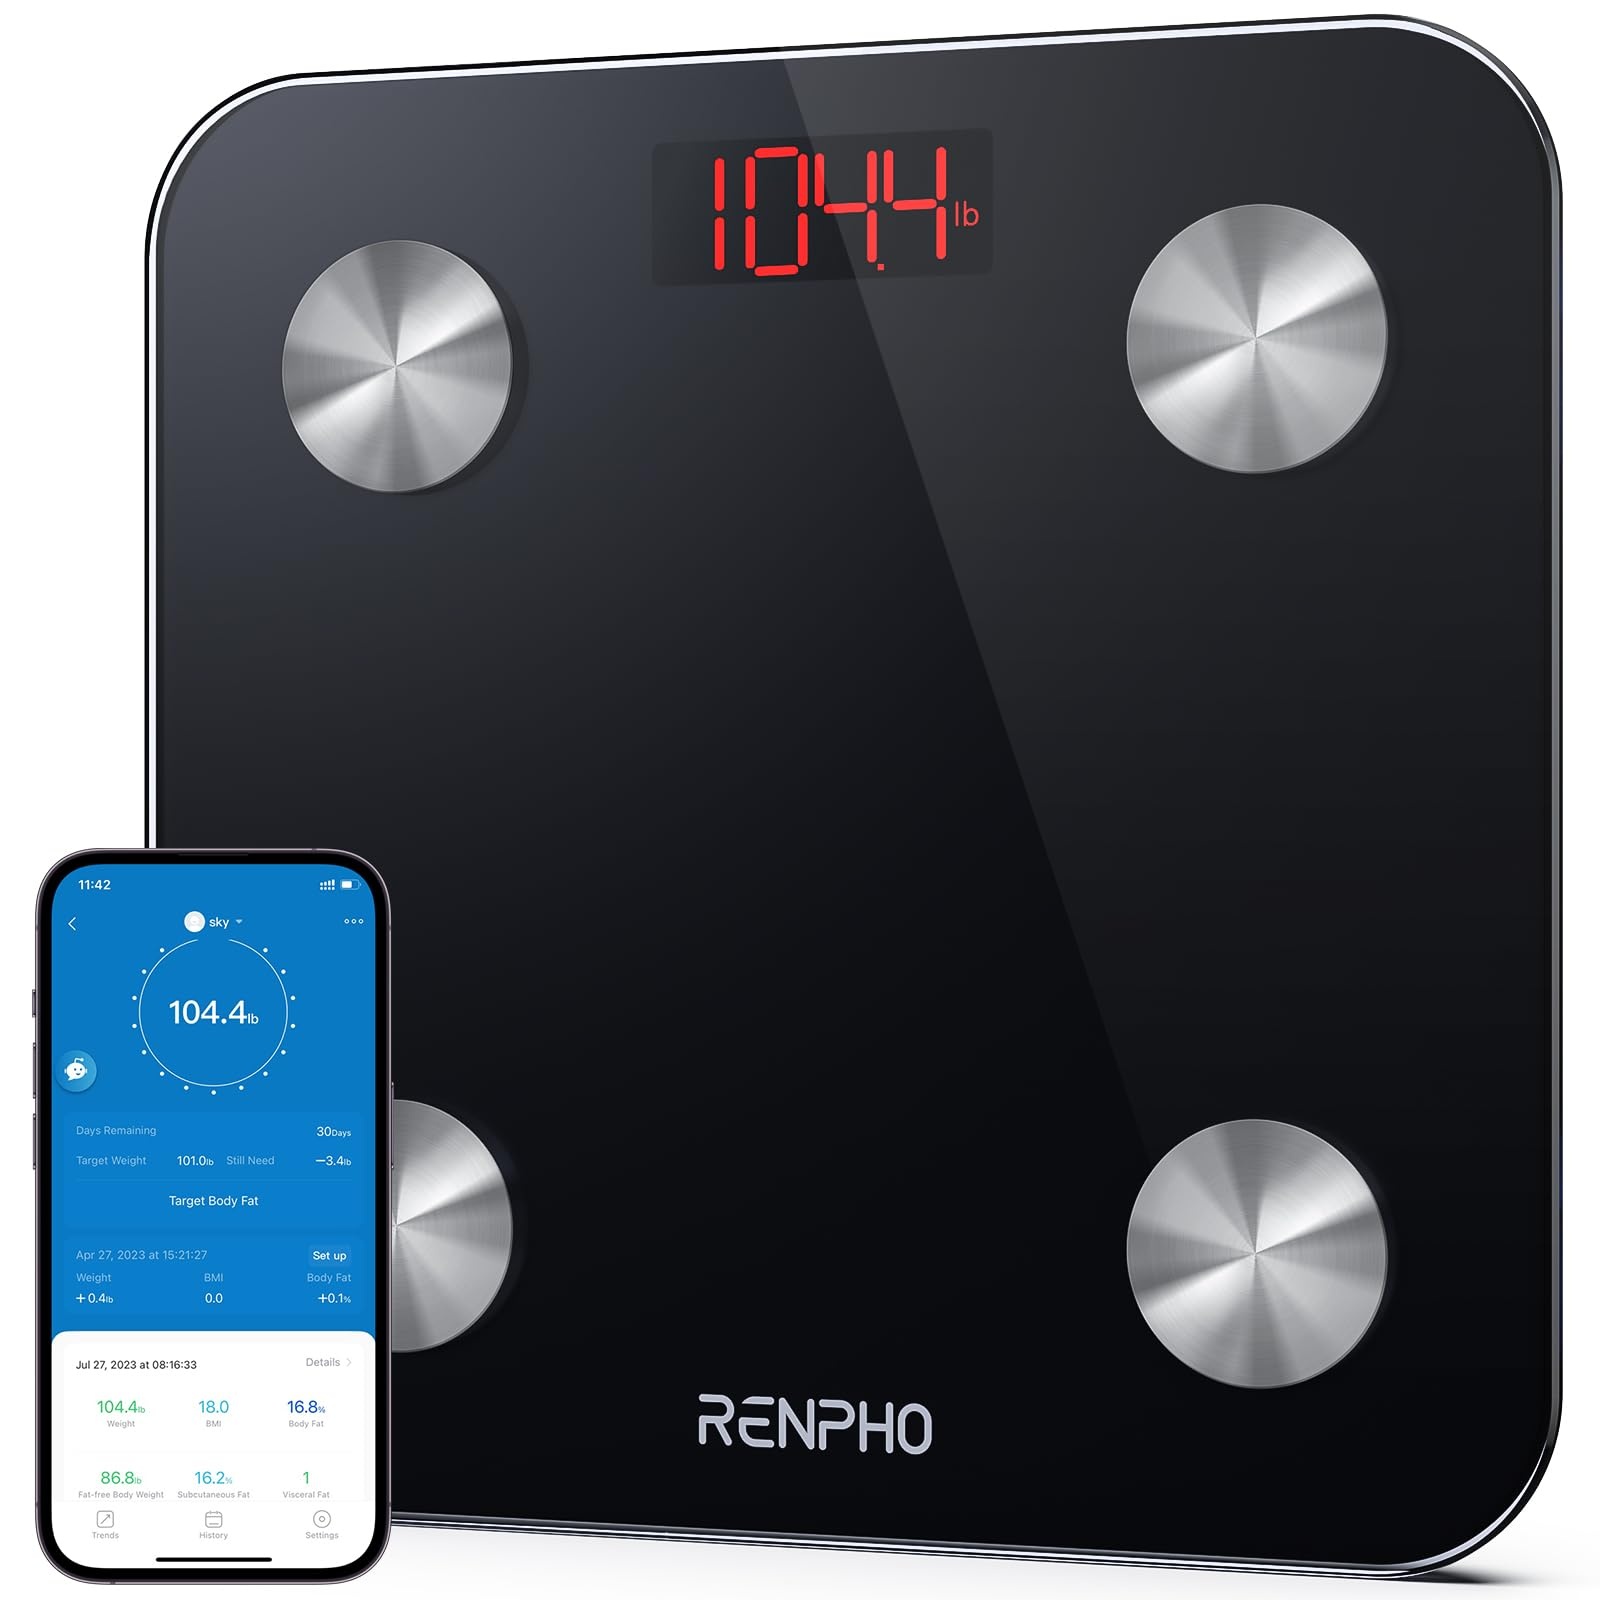 RENPHO Körperfettwaage Personenwaage, Digitale Waage Personen mit hochpräzisen Sensoren, Ultradünn, Bluetooth Waage für Körperfett, BMI, Gewicht, Muskelmasse, Wasser